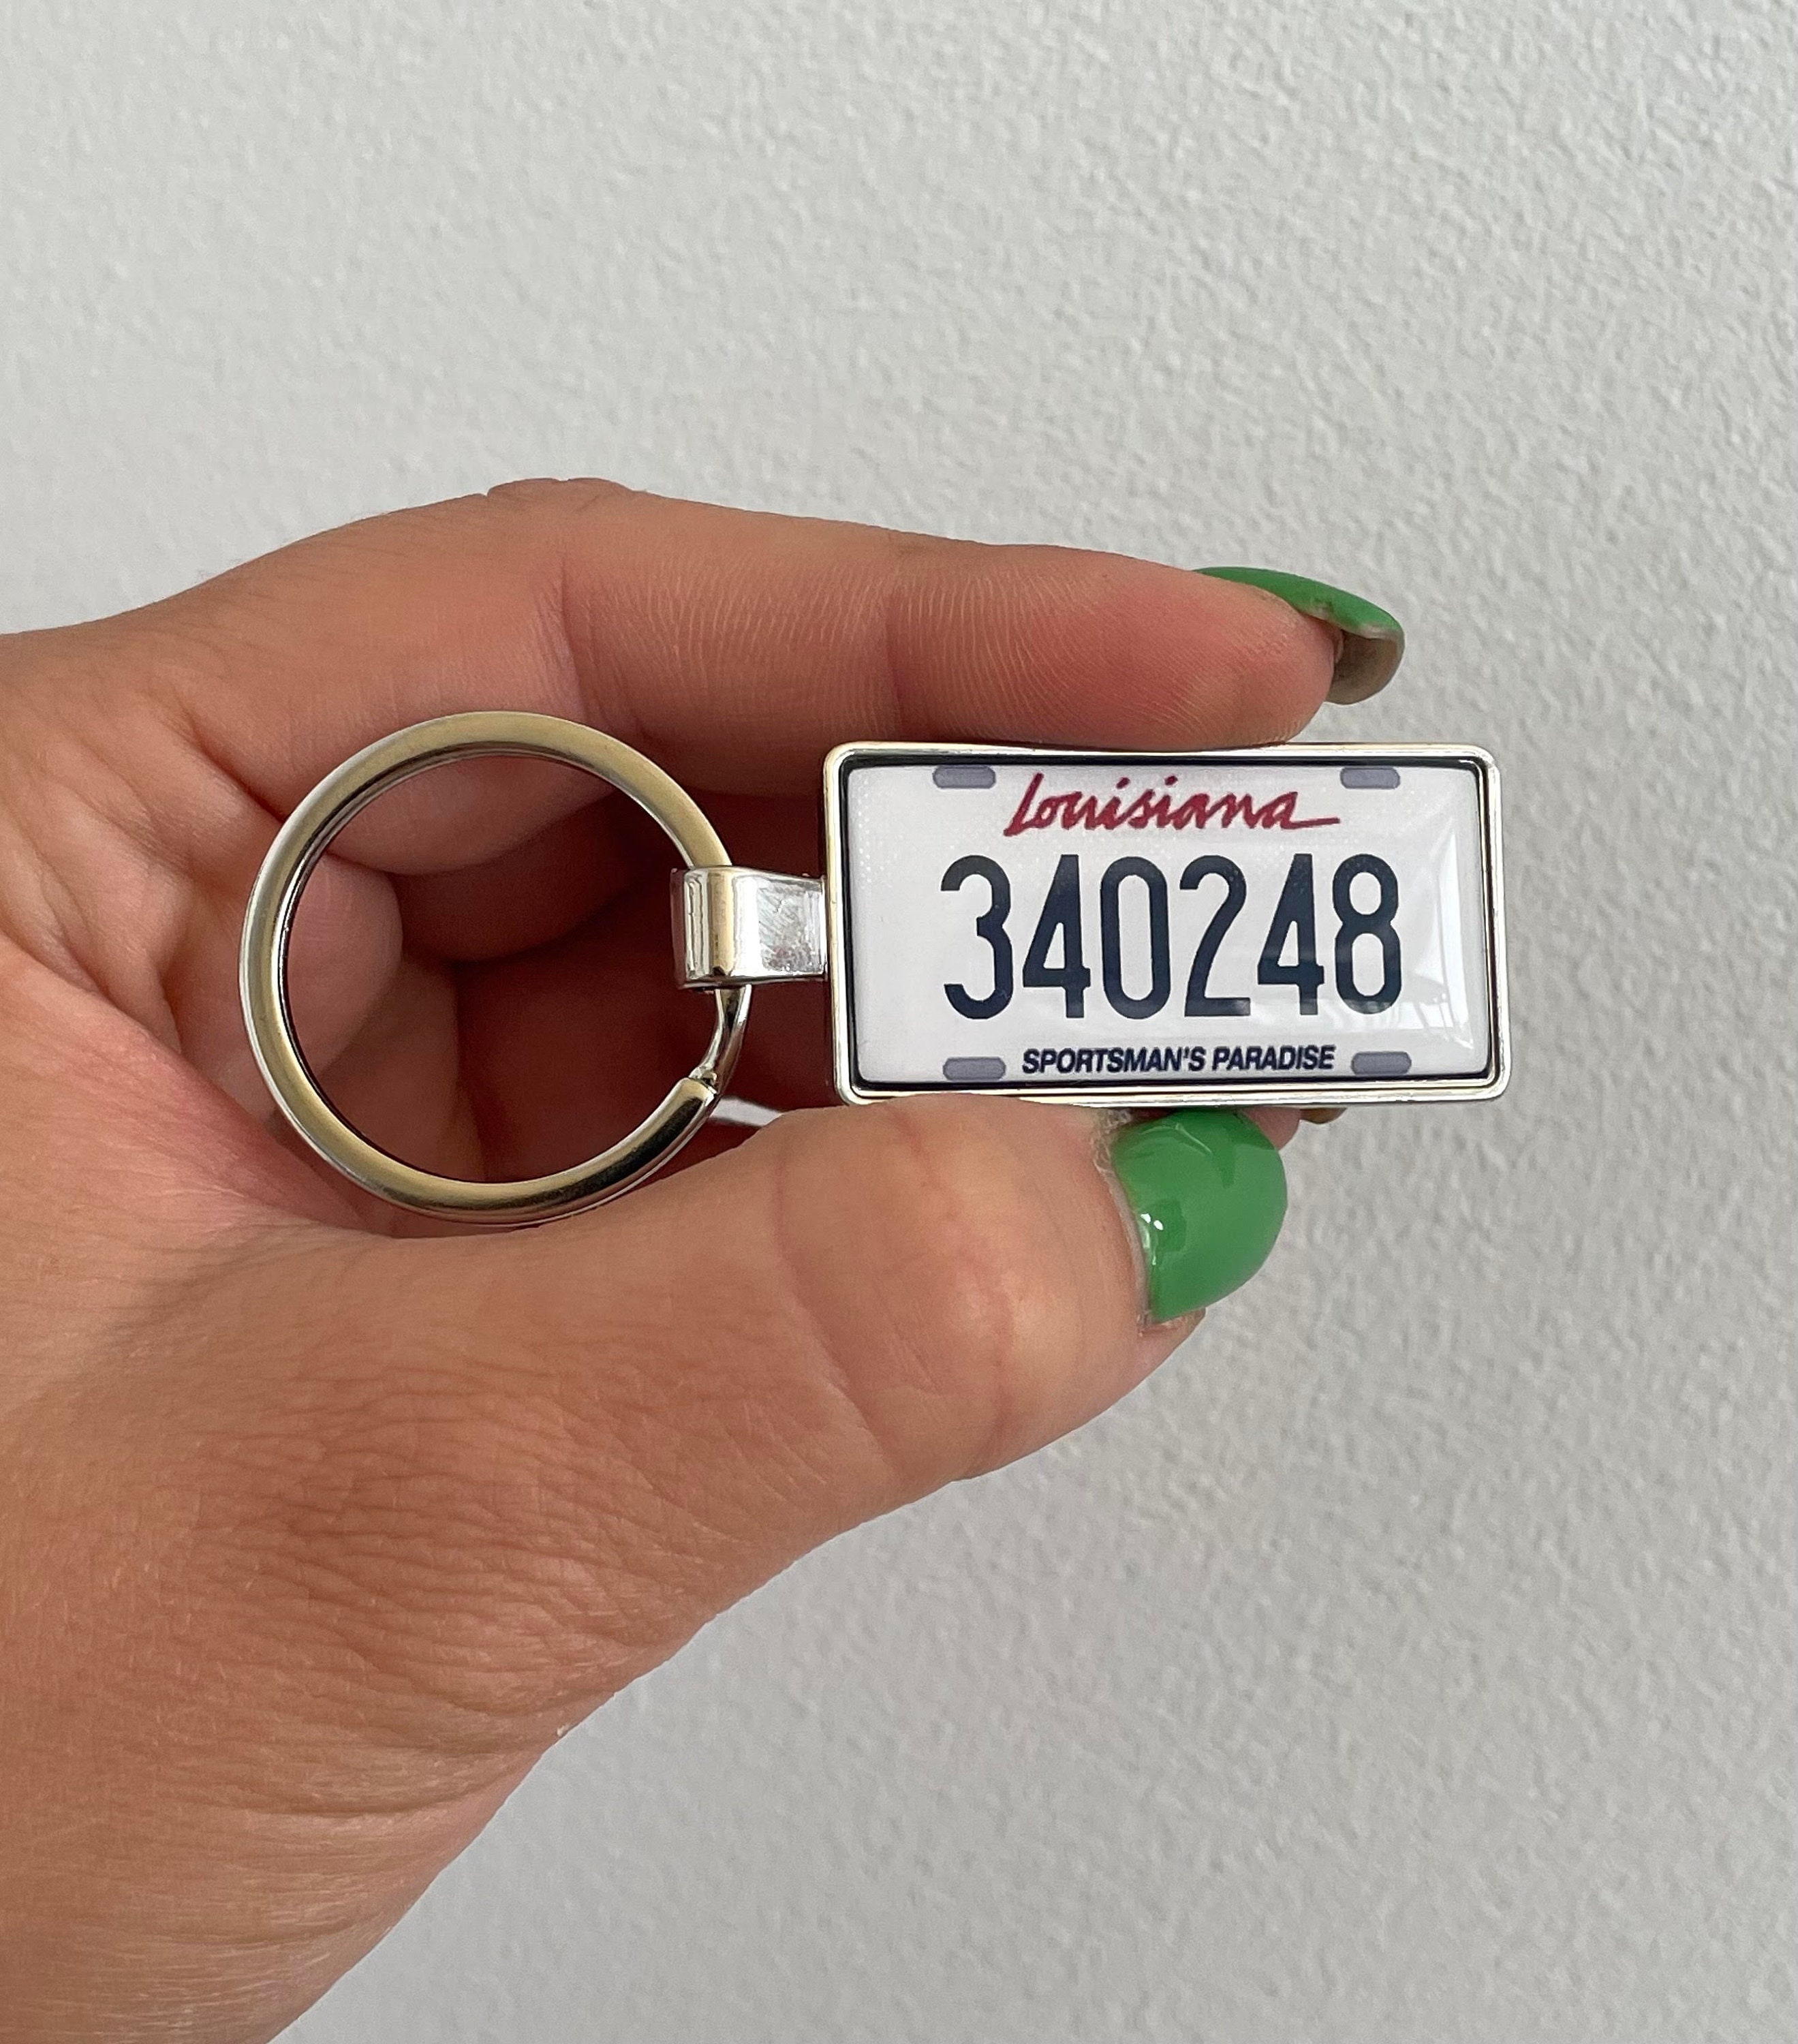 louisiana license plate keychain